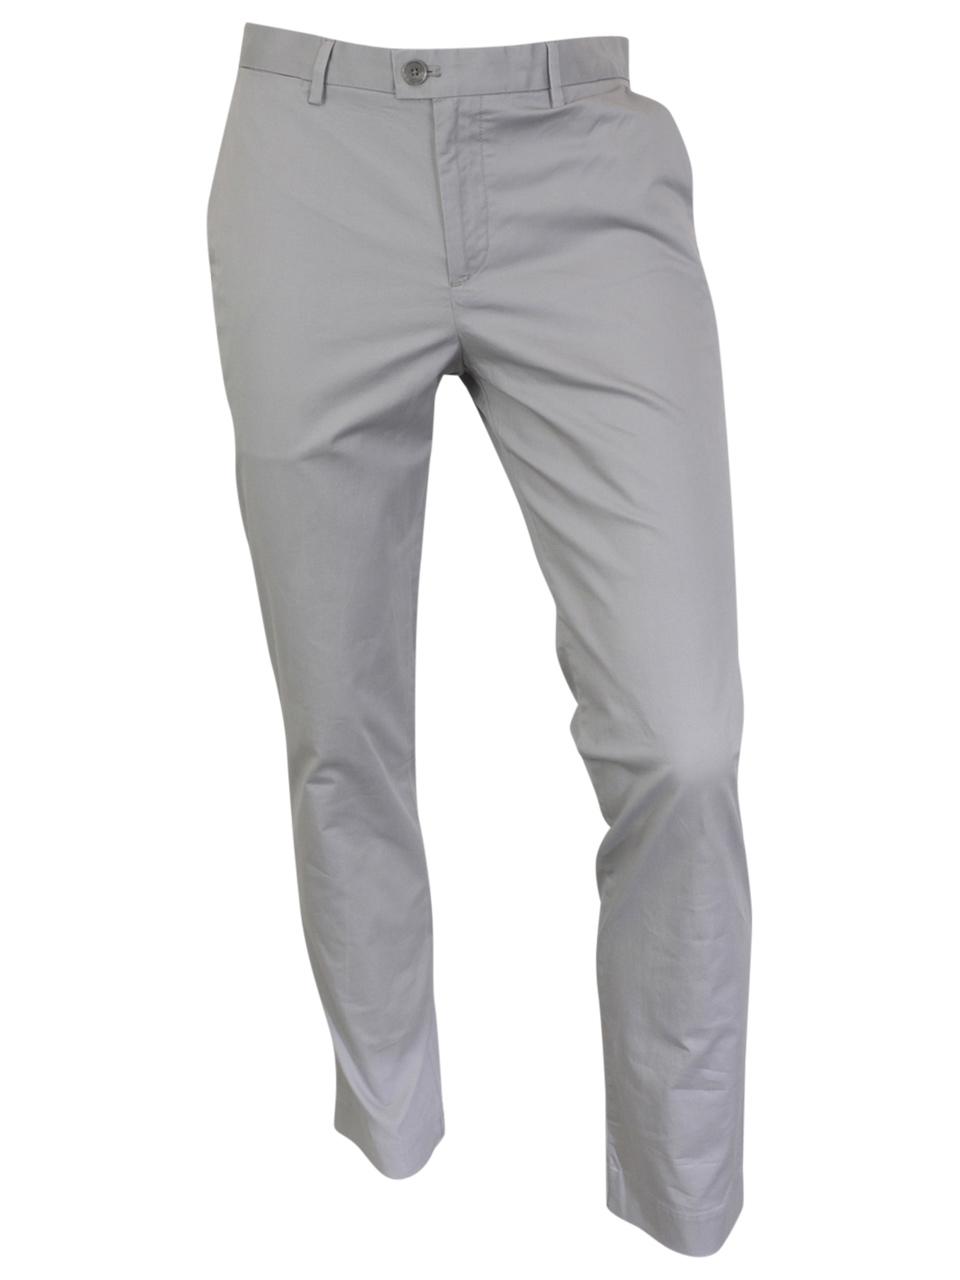 Calvin Klein Men's Slim Fit Solid Stretch Chino Pants | eBay